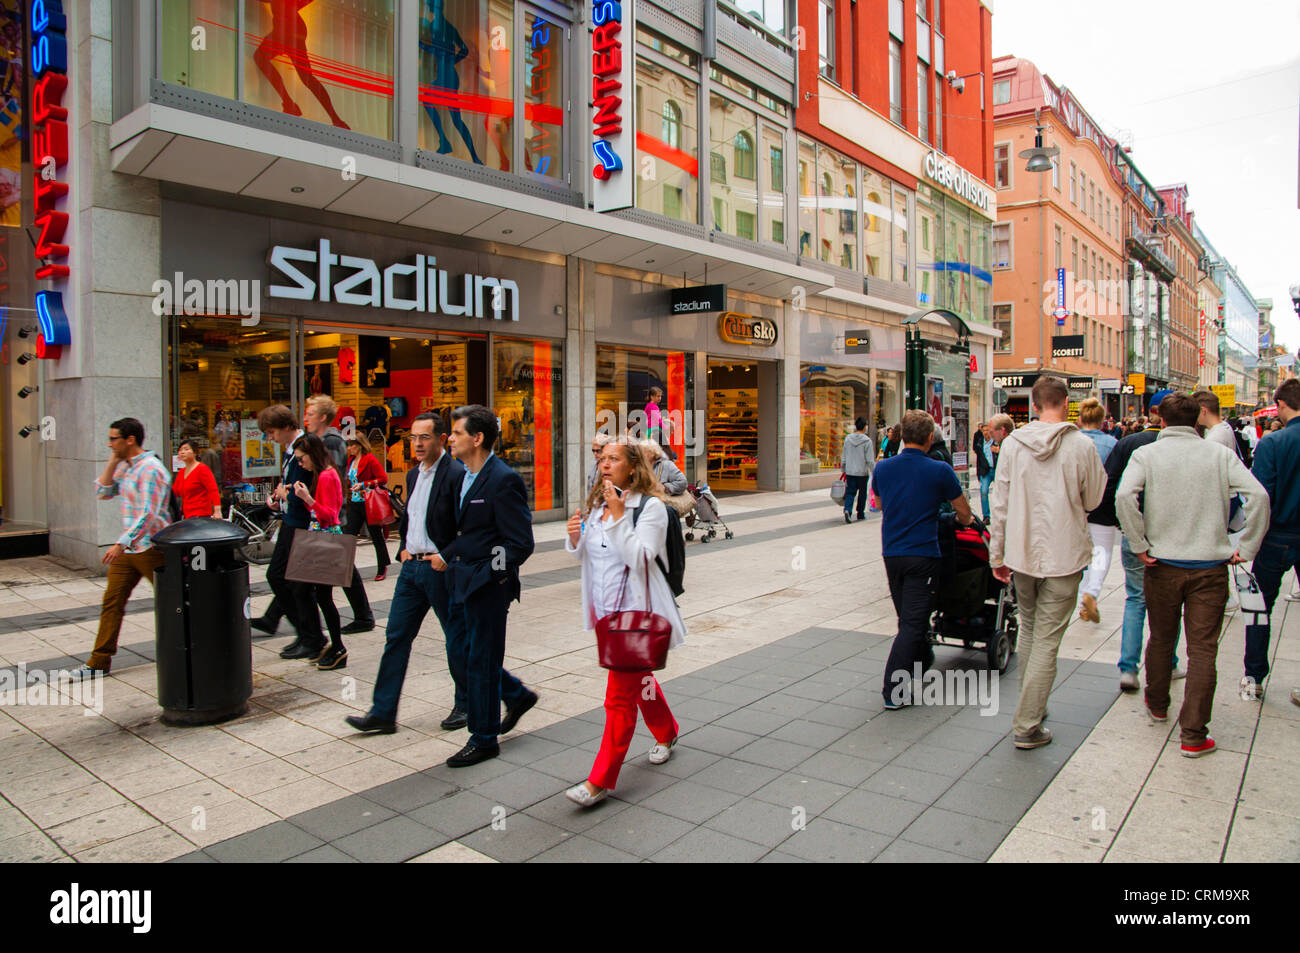 Drottninggatan pedestrian street Norrmalm district central Stockholm Sweden Europe Stock Photo